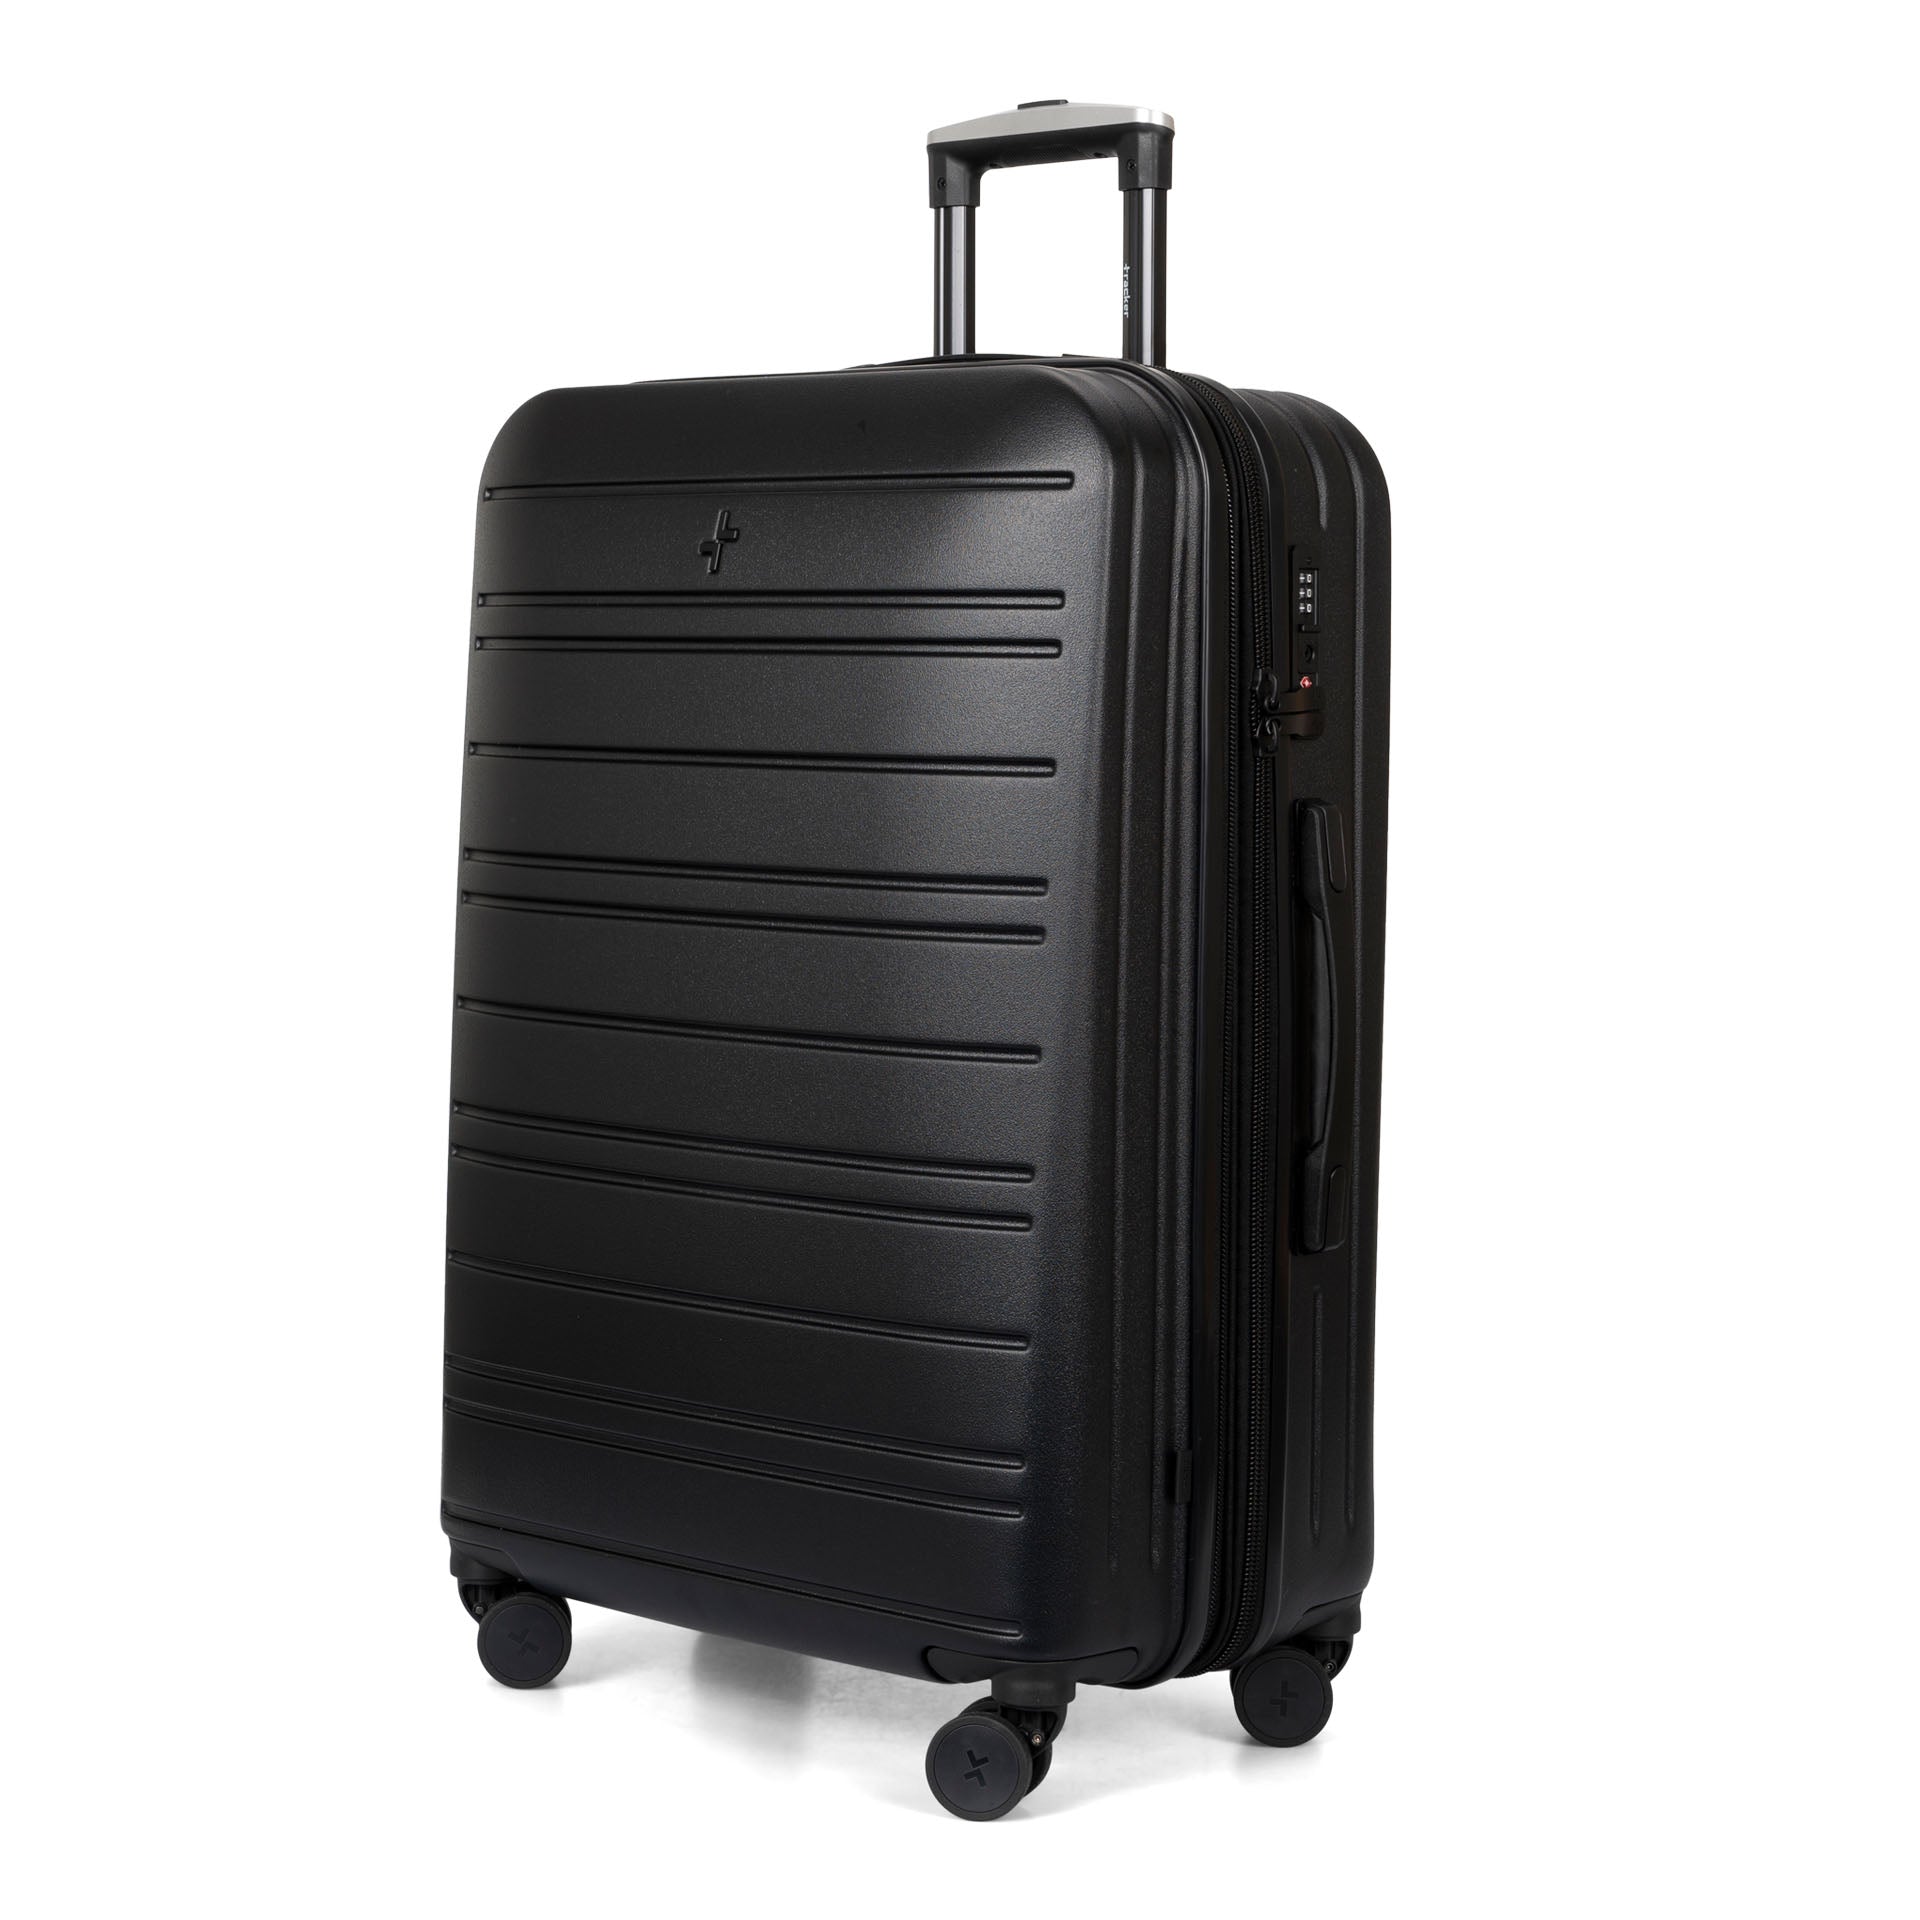 Legend Hardside 3-Piece Luggage Set